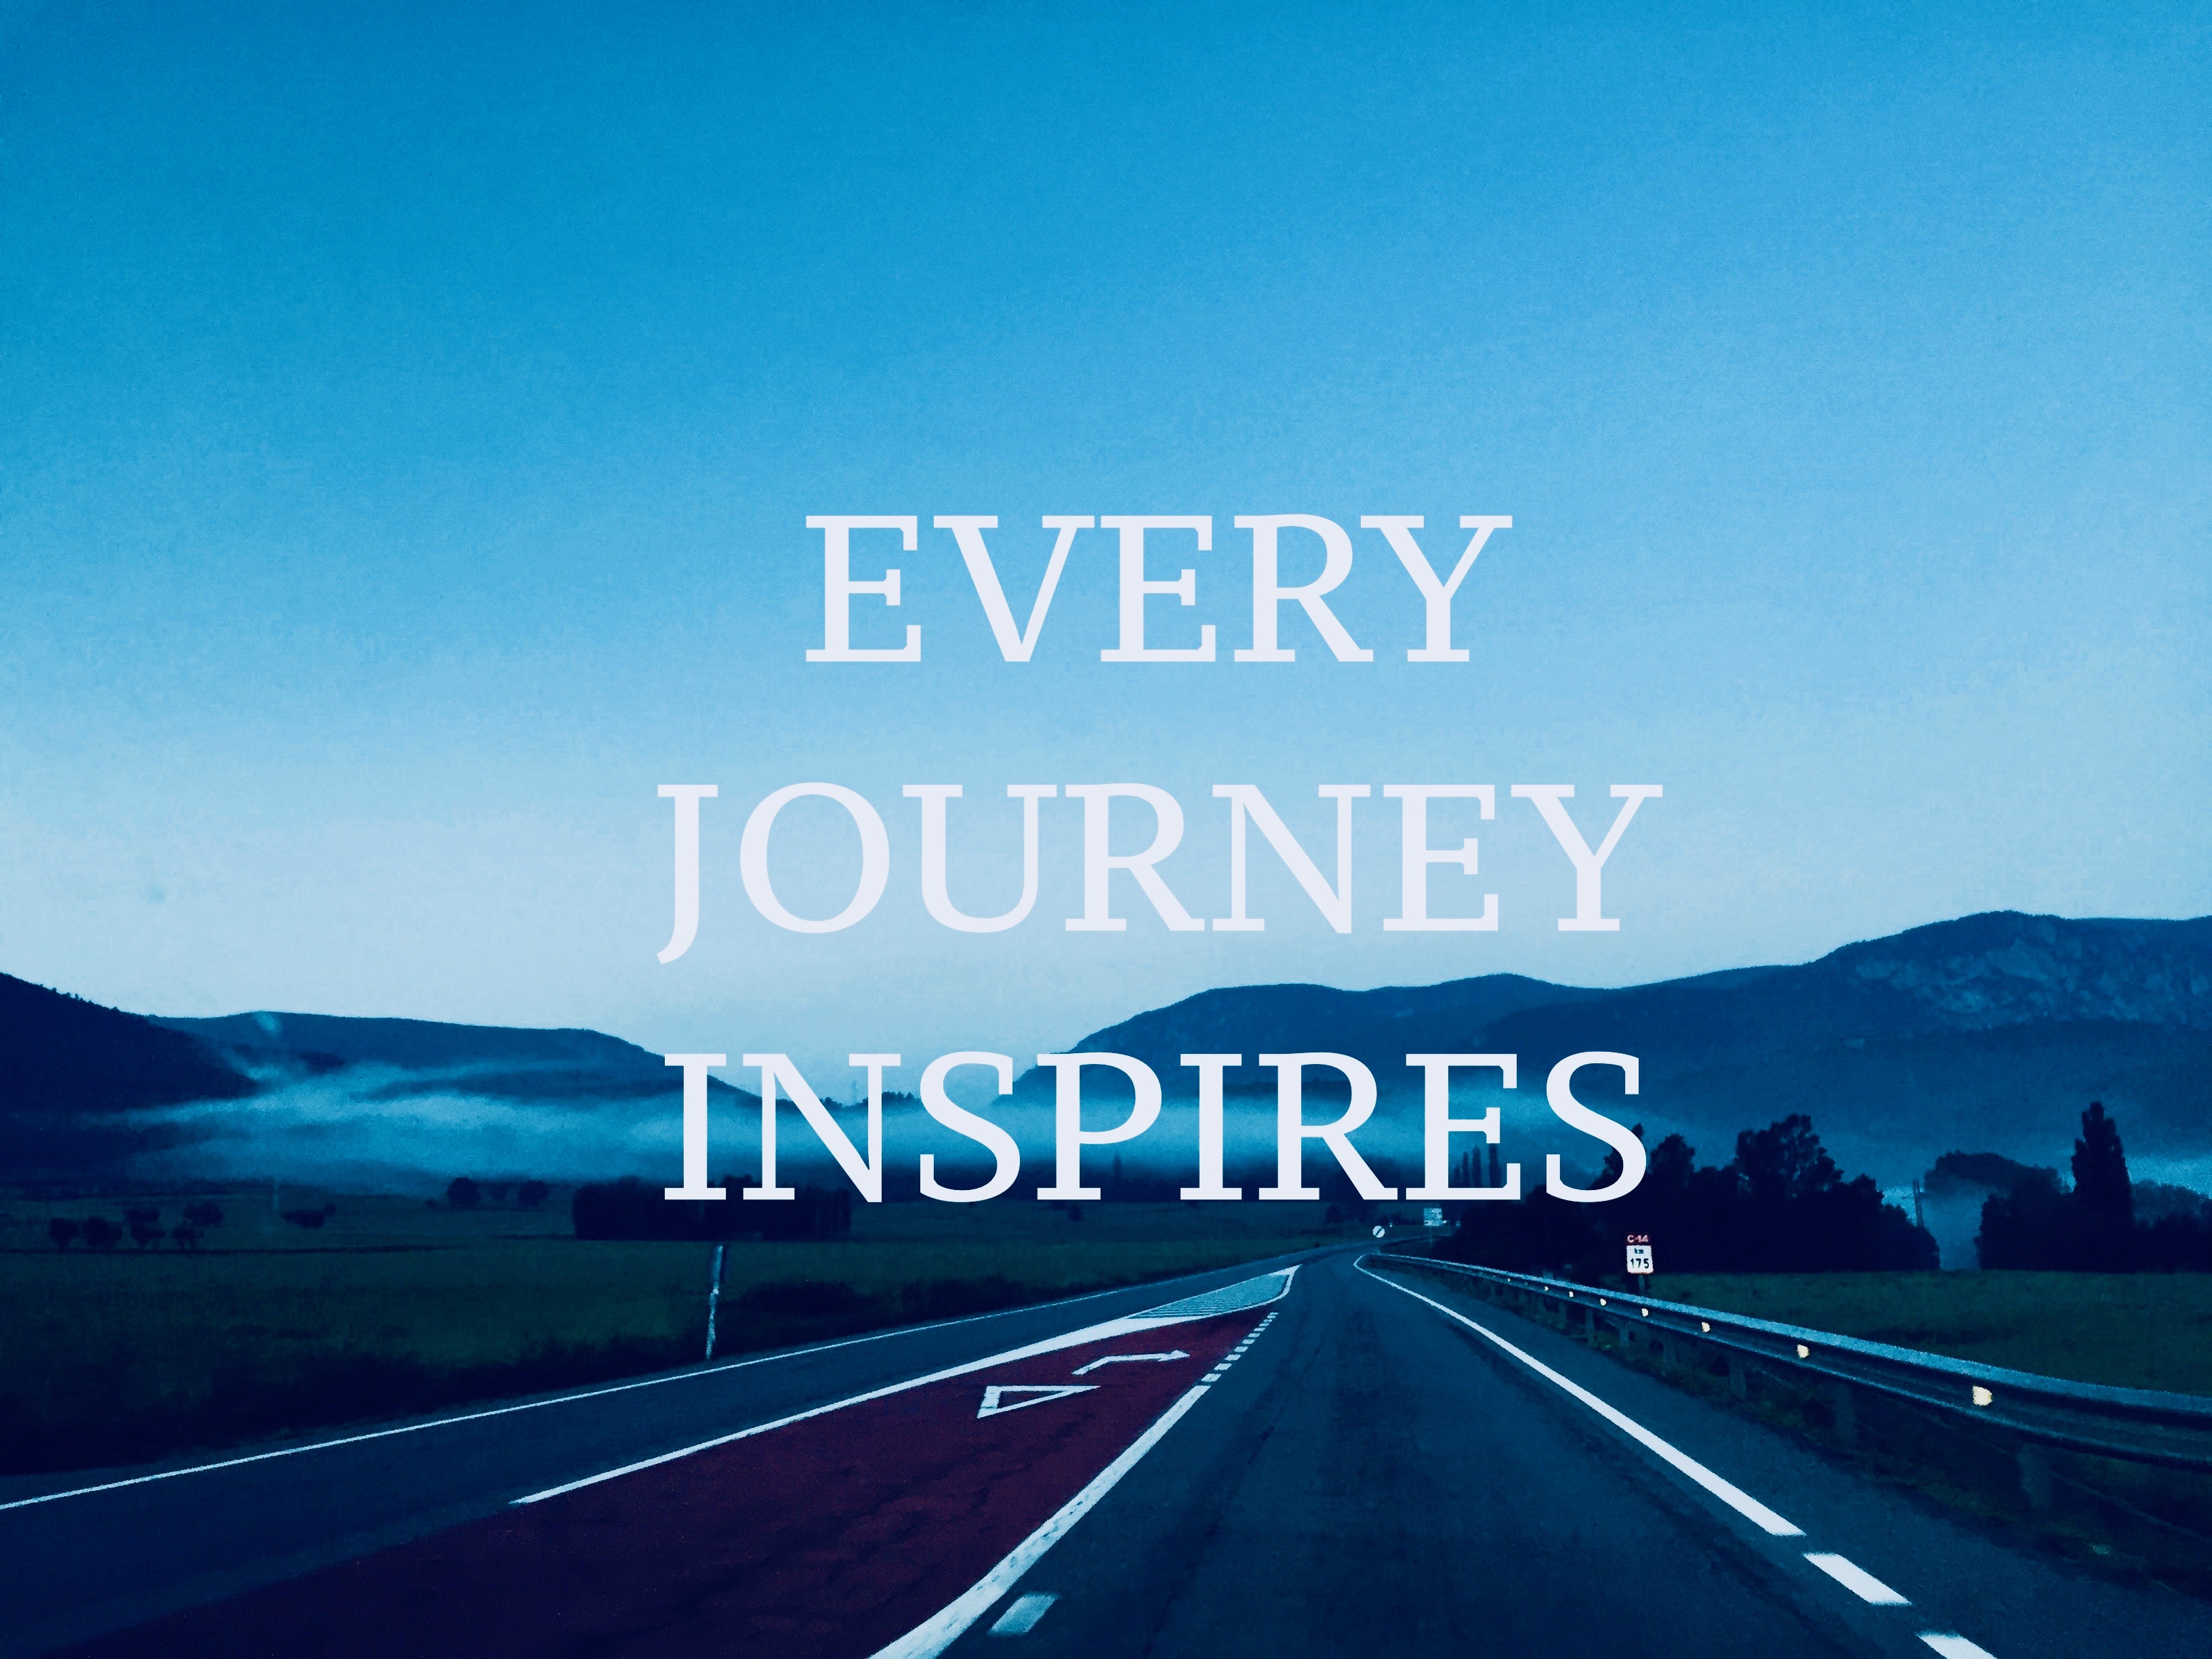 Start your journey. Just Travel. Starting Journey inspiring pics.